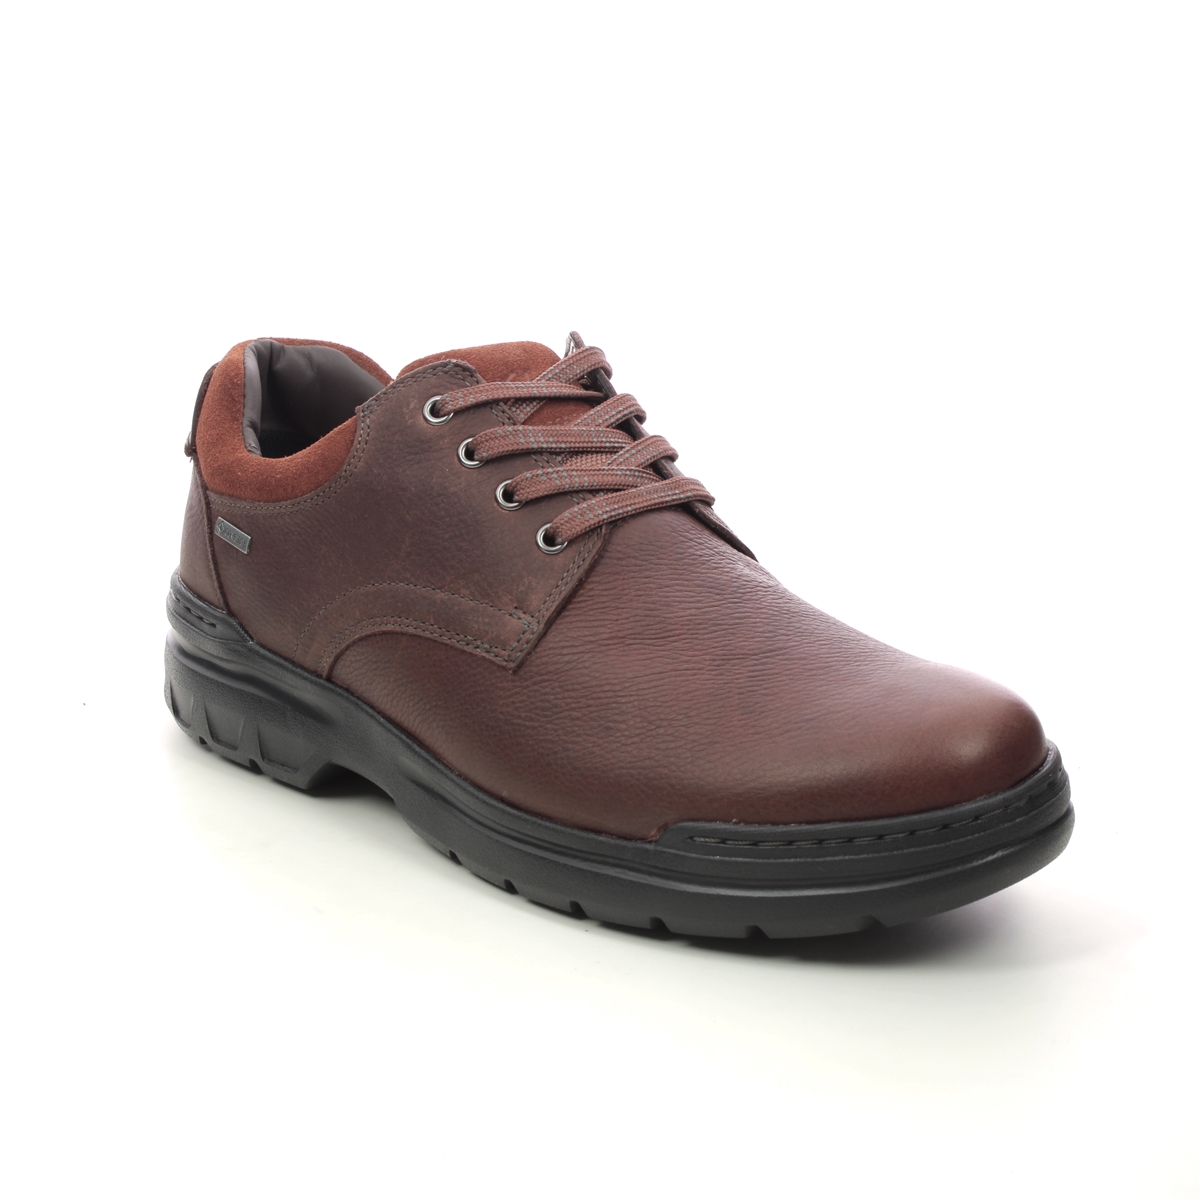 Clarks Rockie Walk Gtx Tan Leather Mens comfort shoes 7346-58H